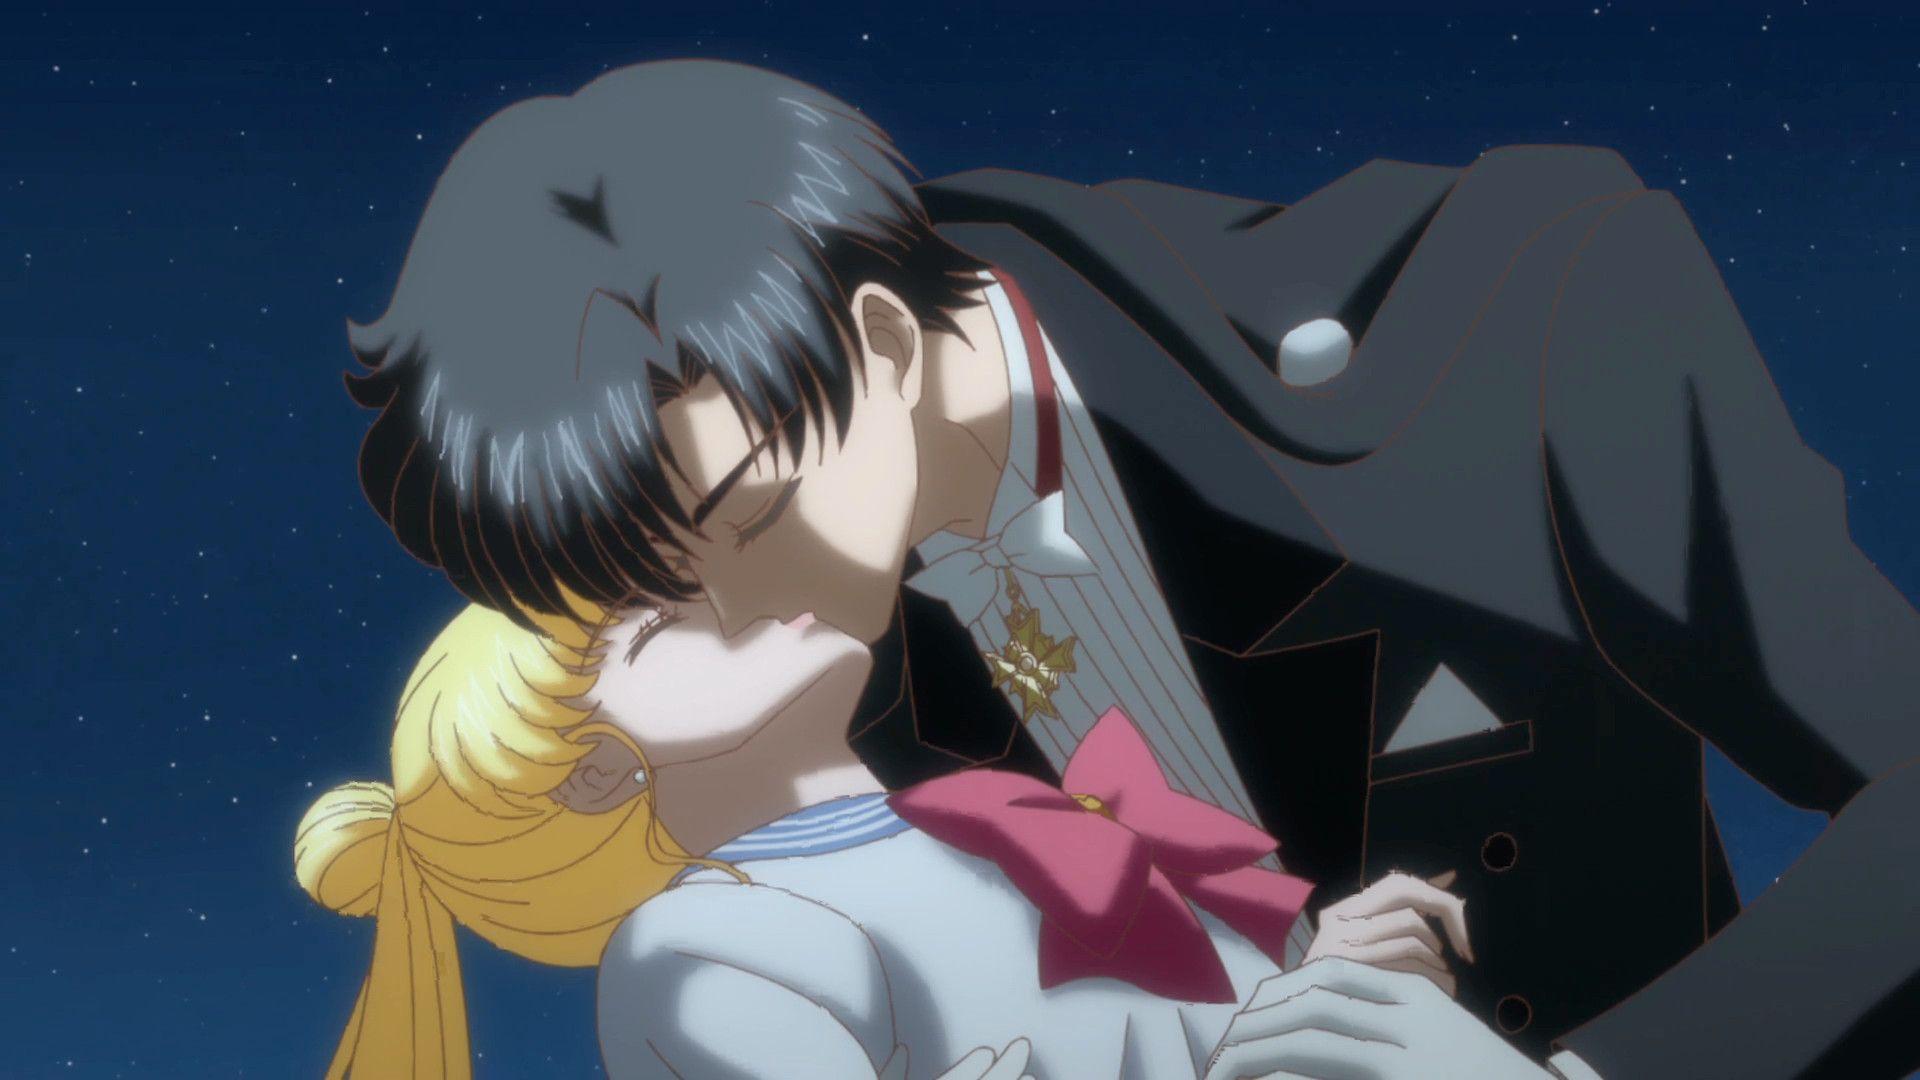 sailor moon and tuxedo mask wallpaper kissing